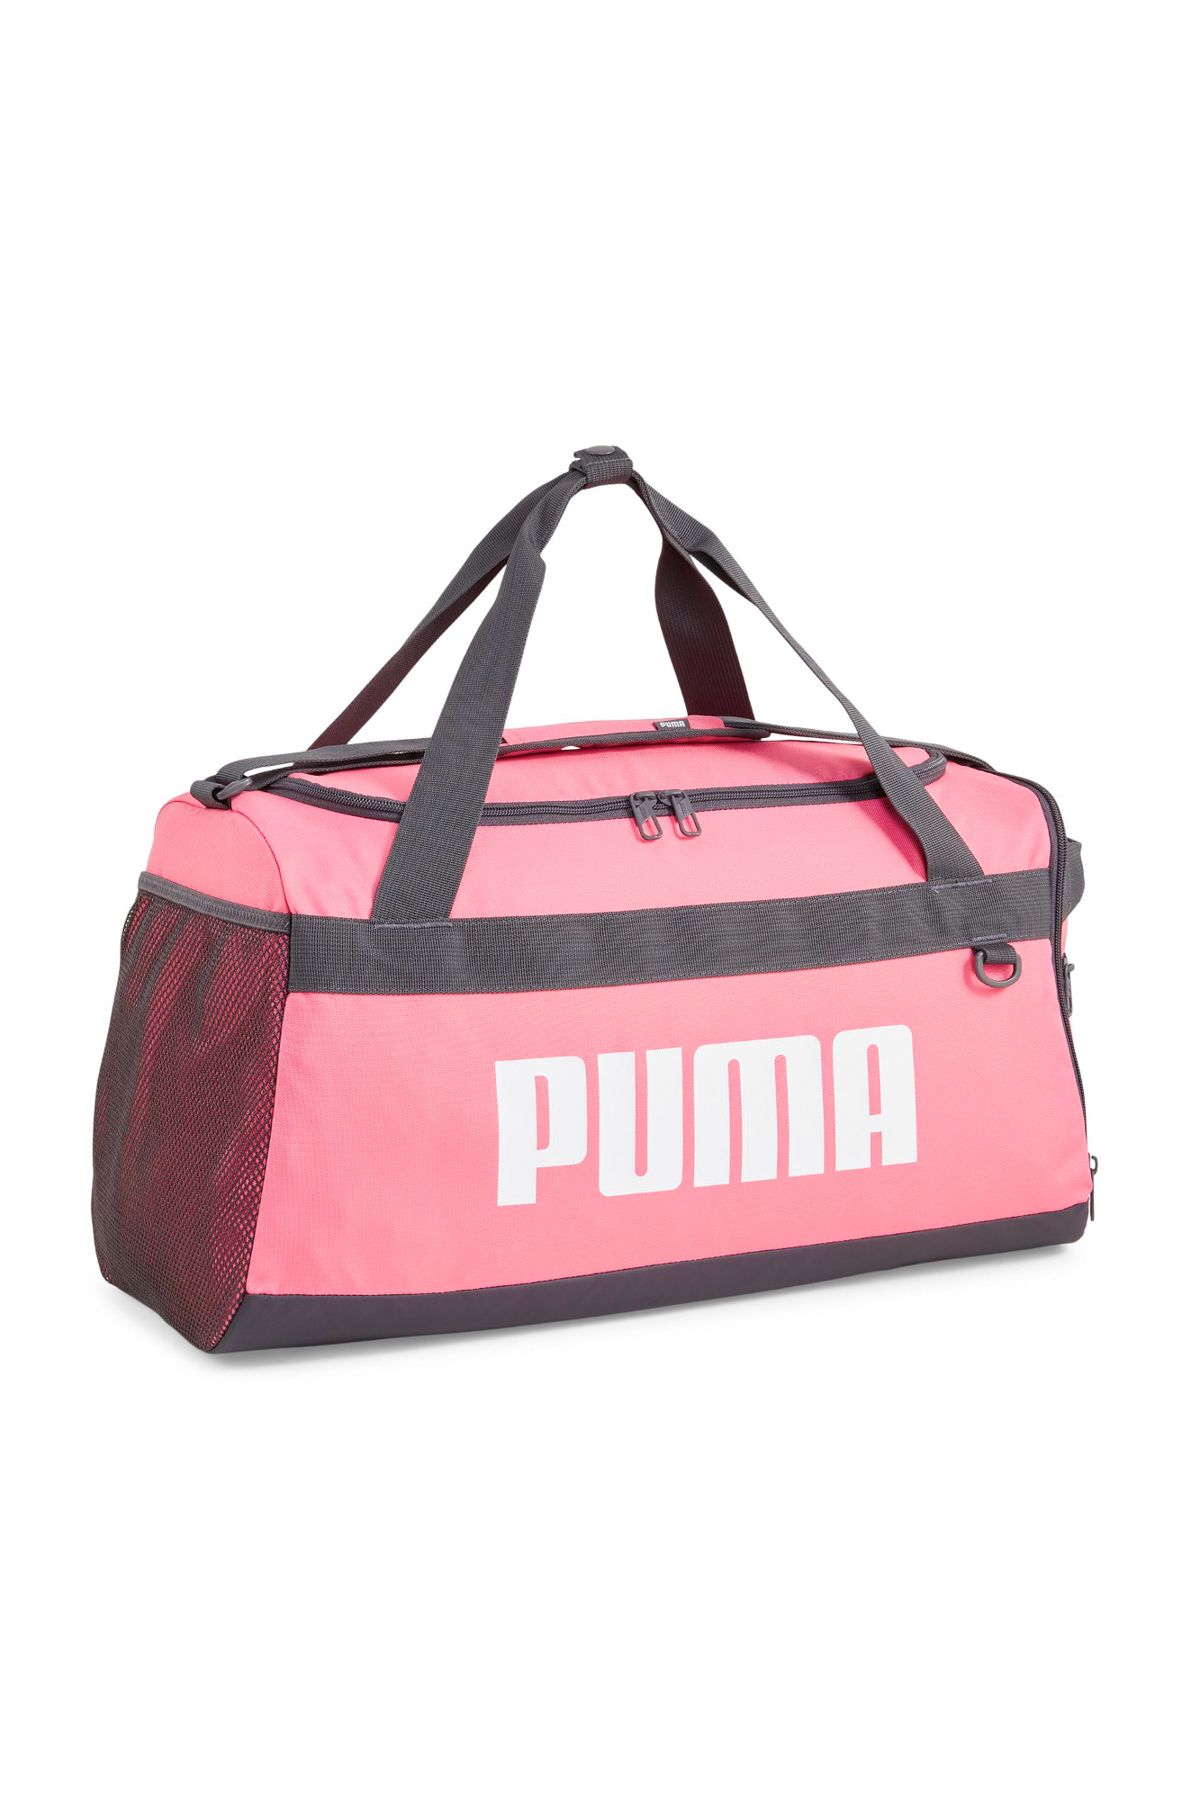 Puma Challenger Duffel Bag S07953009